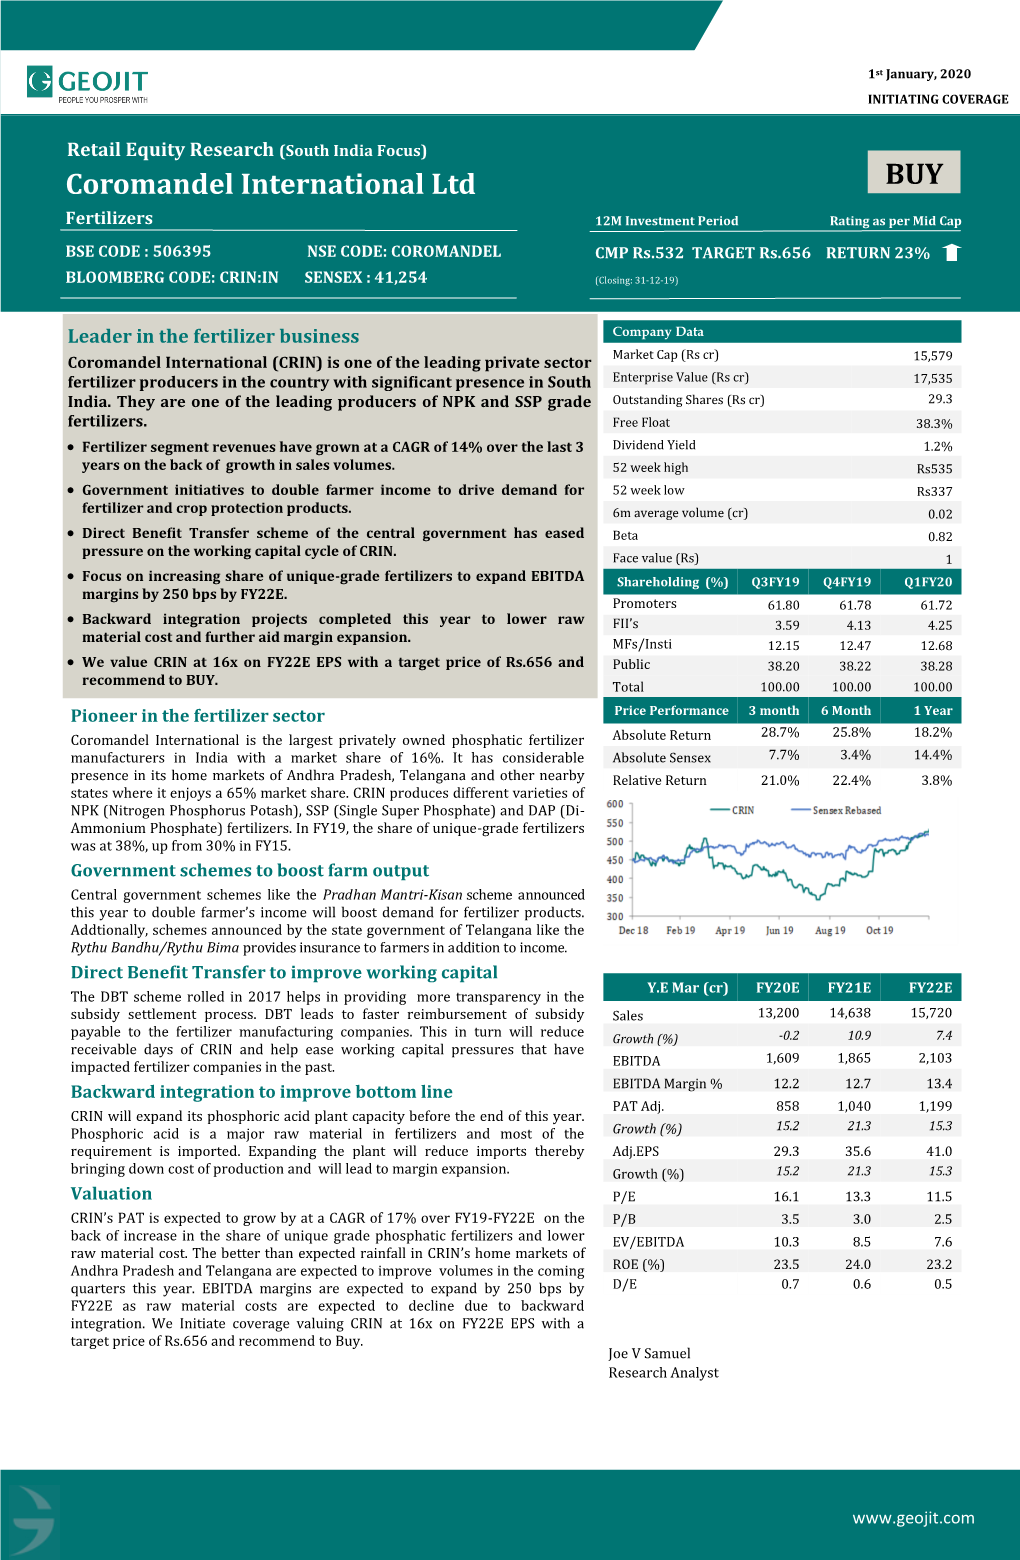 Coromandel International Ltd BUY Fertilizers 12M Investment Period Rating As Per Mid Cap BSE CODE : 506395 NSE CODE: COROMANDEL CMP Rs.532 TARGET Rs.656 RETURN 23%